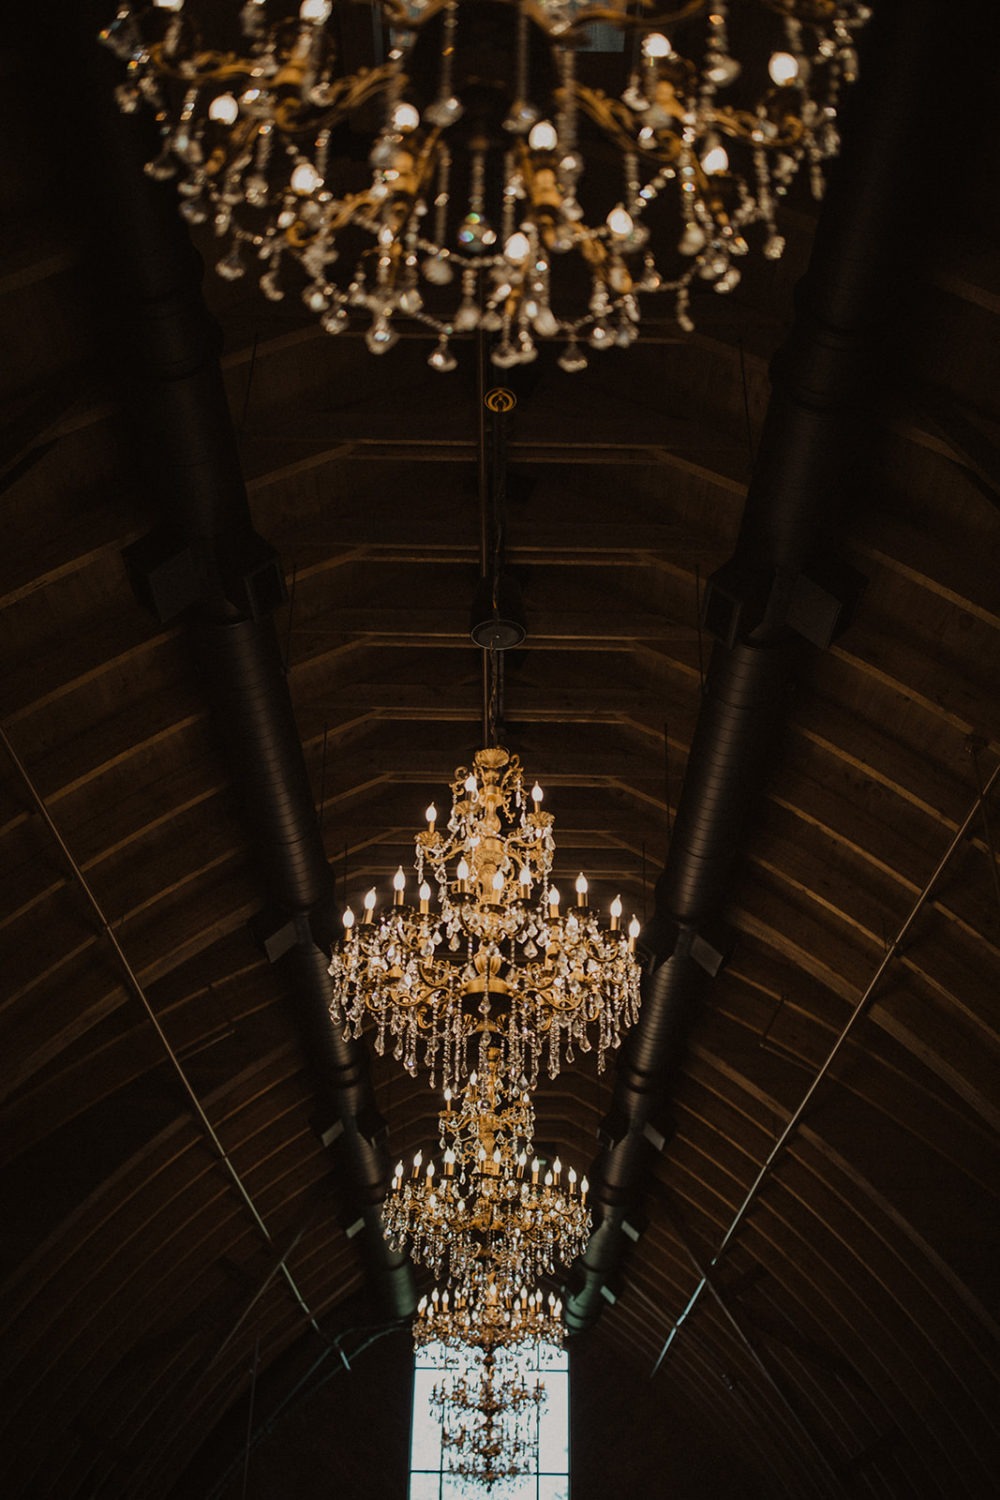 Lit chandeliers hang at Virginia barn wedding venue